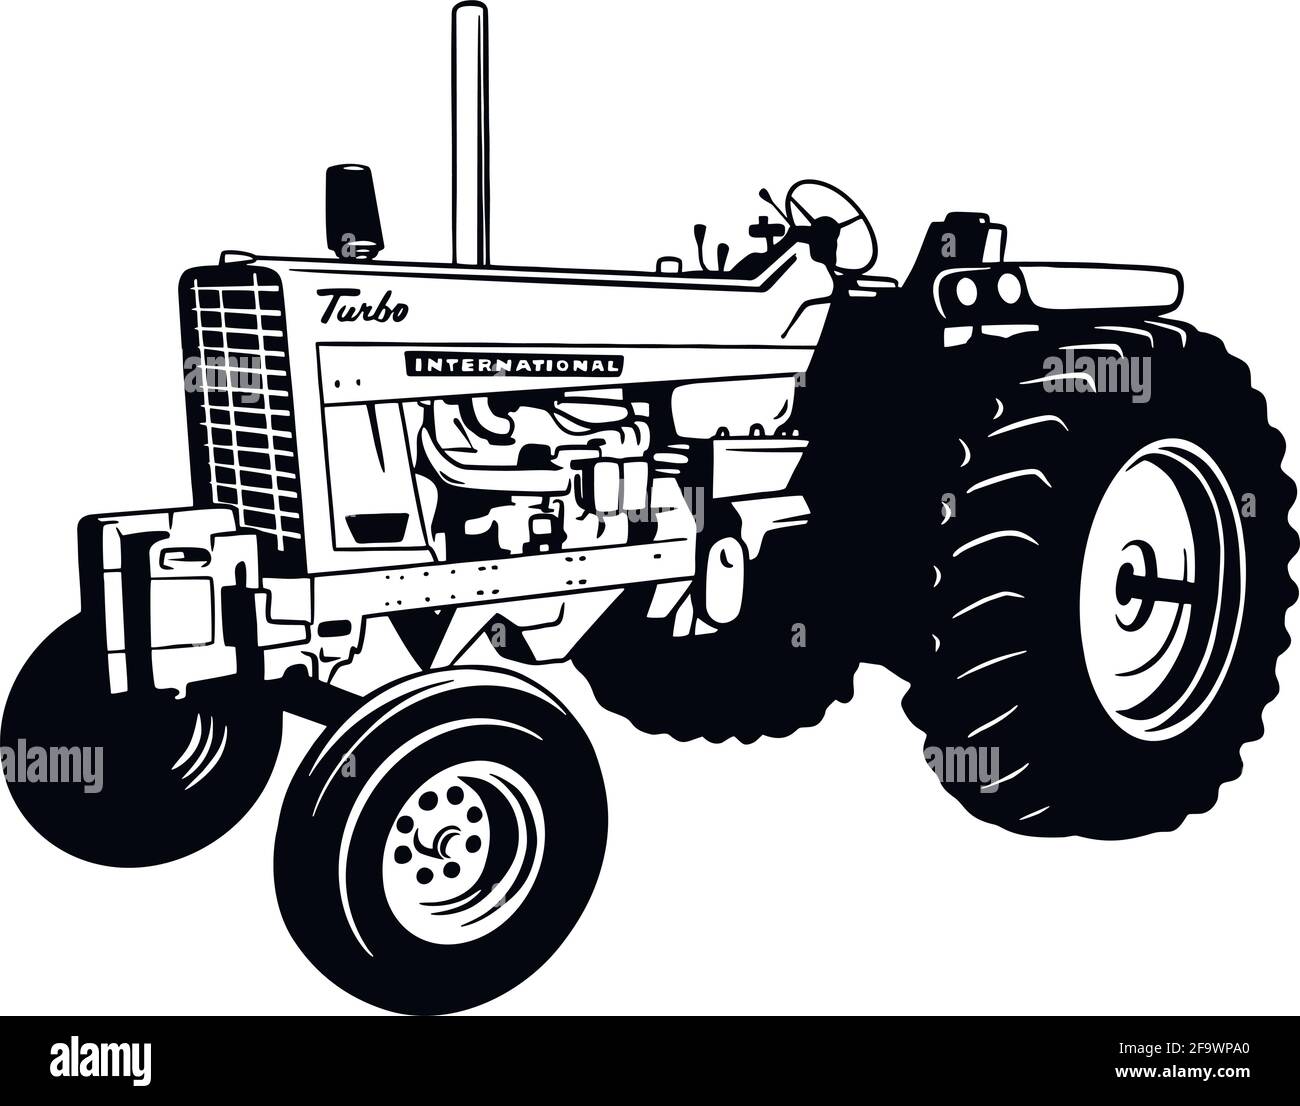 Farm Tractor, Harvest, Farmer Vehicle, Stencil, Silhouette, Vector Clip Art Stock Vector